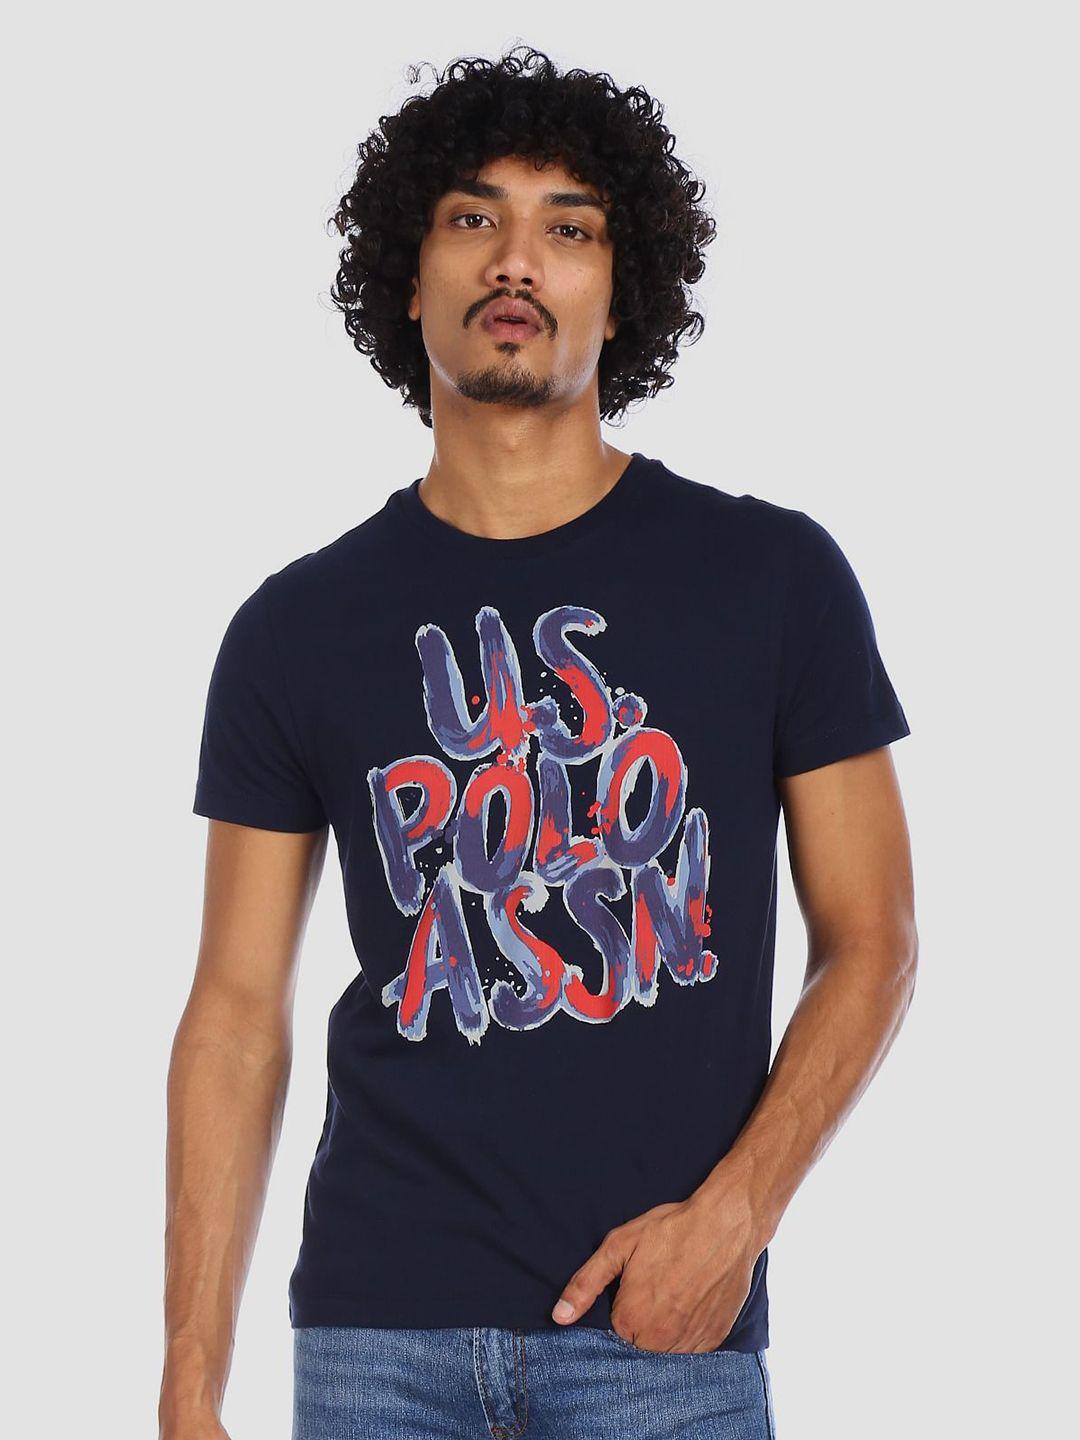 u.s. polo assn. denim co. men navy blue slim fit brand logo printed round neck pure cotton t-shirt